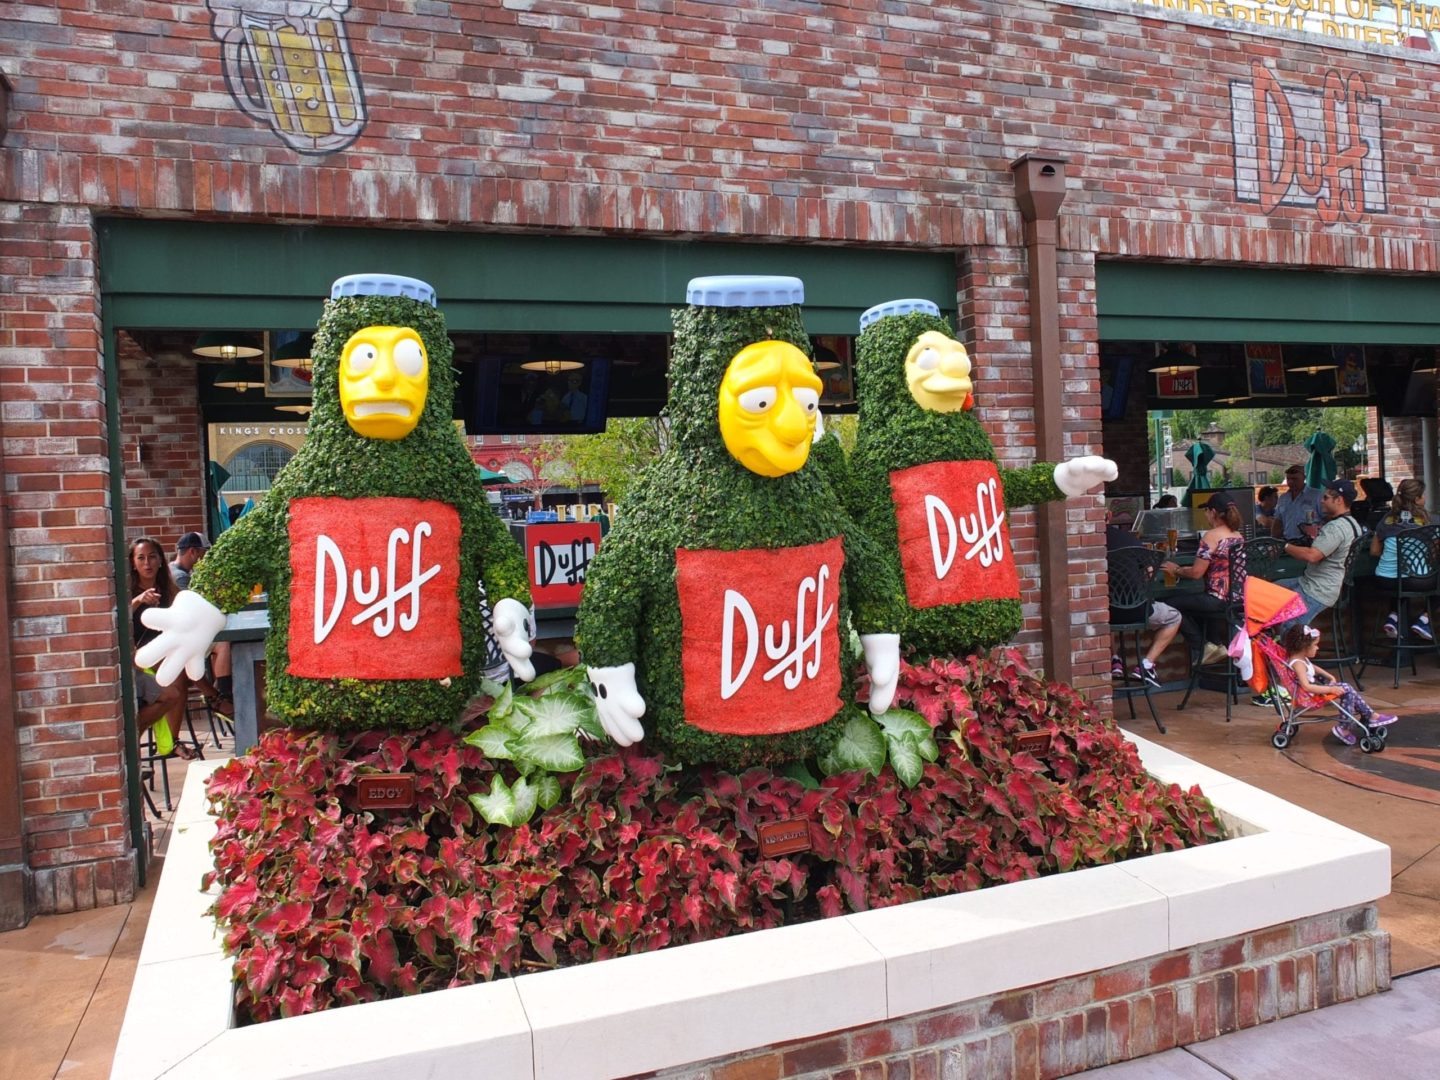 Duff beer bottles in Simpsons Land Universal Studios